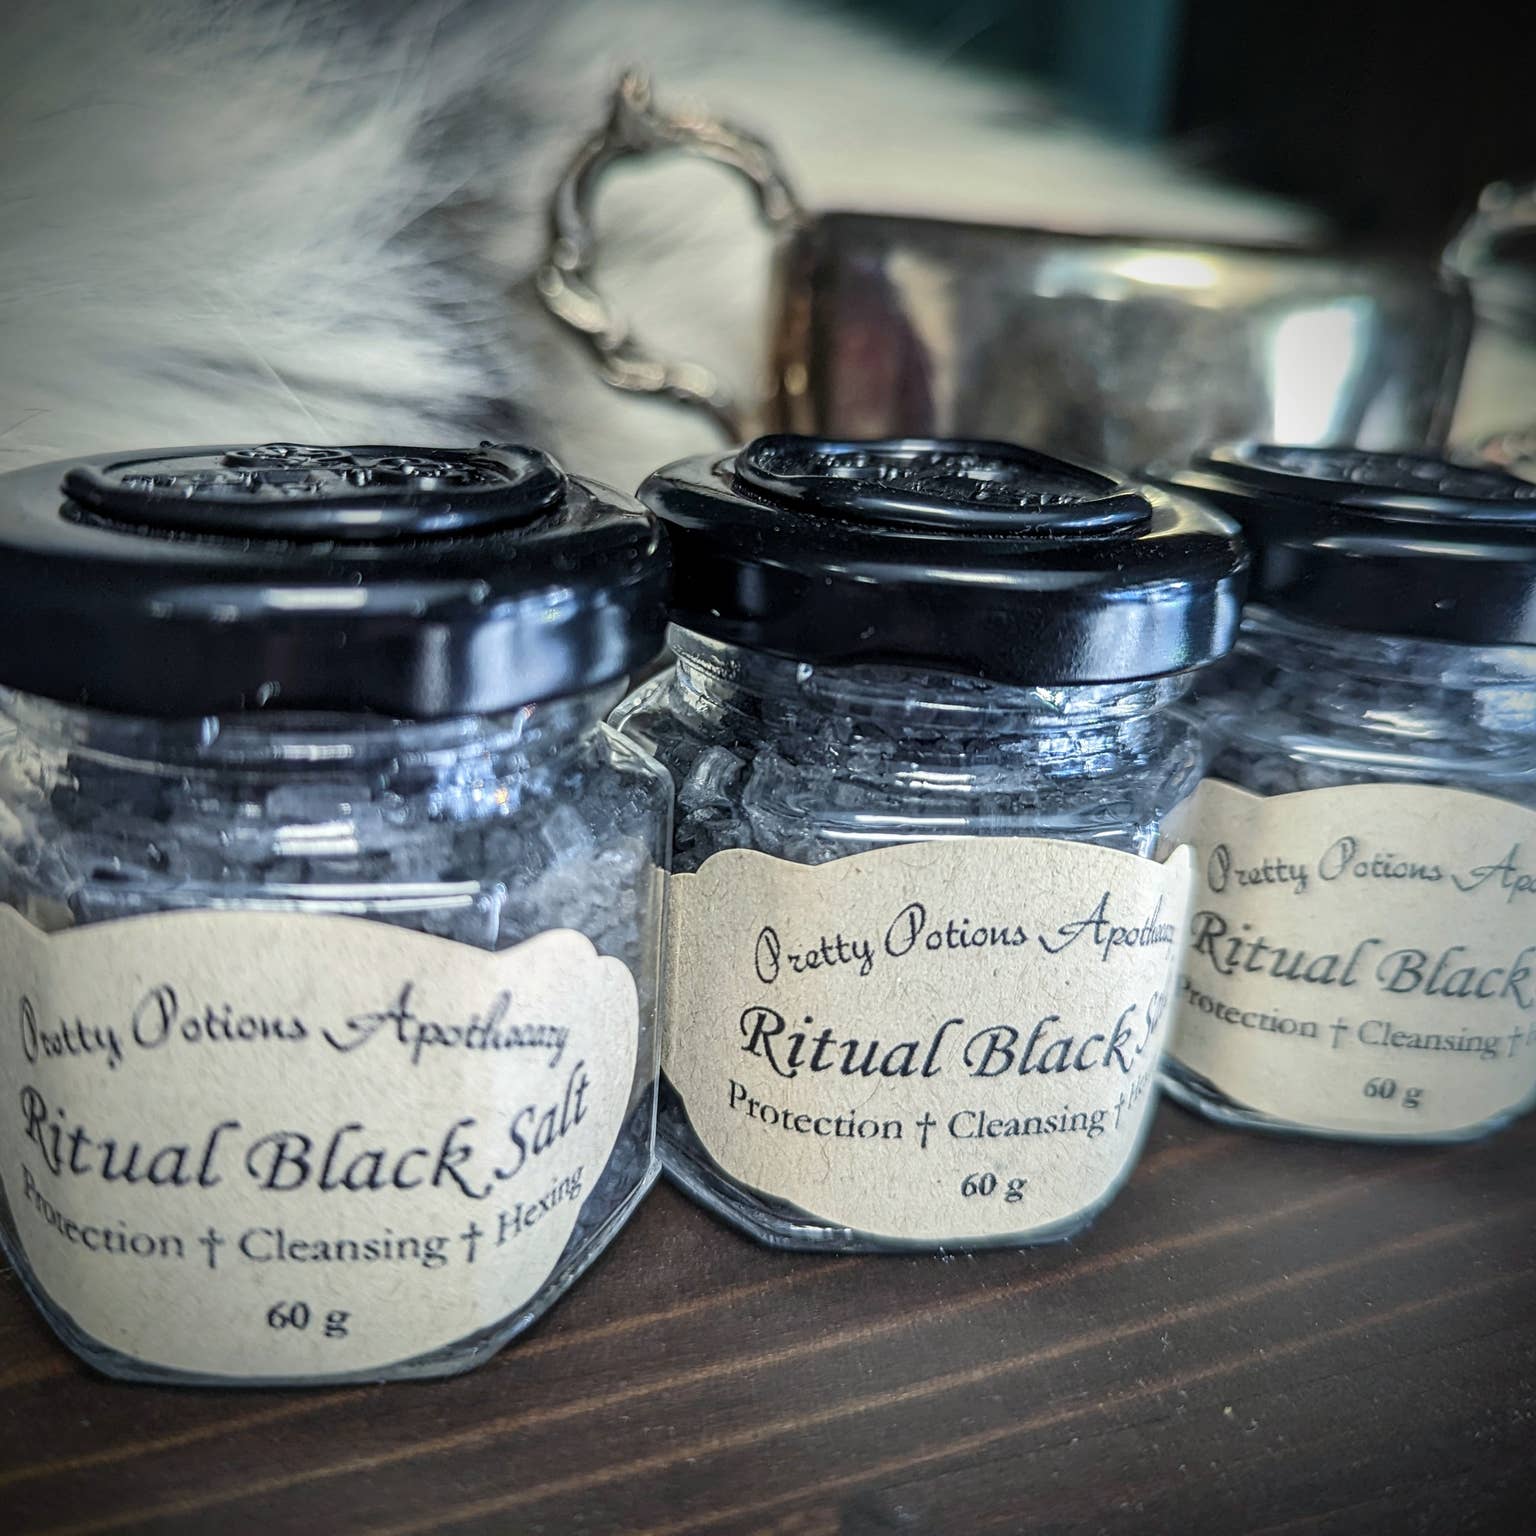 Ritual Black Salt